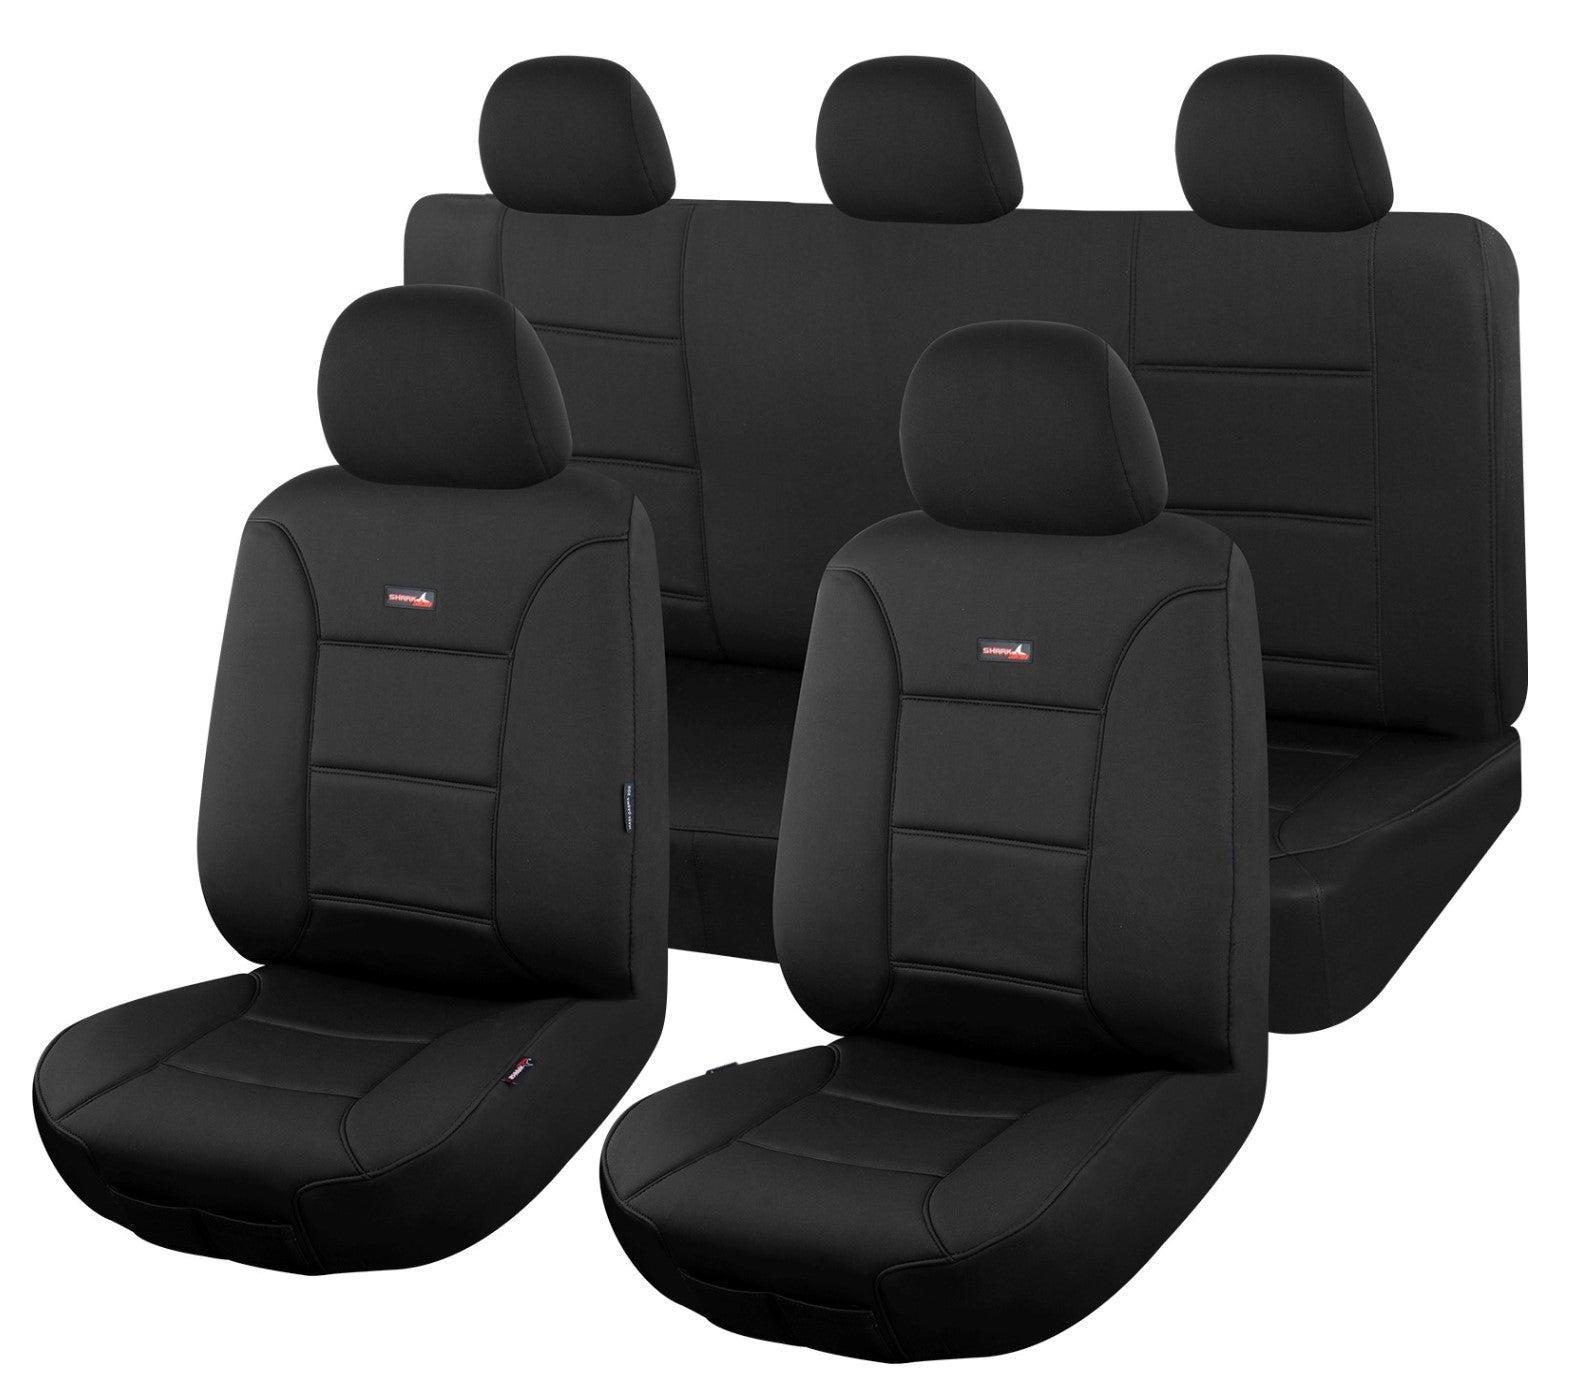 Sharkskin Ultimate Neoprene Seat Covers - For Toyota Prado 150 Series 4X4 Wagon (11/2009-05/2021)